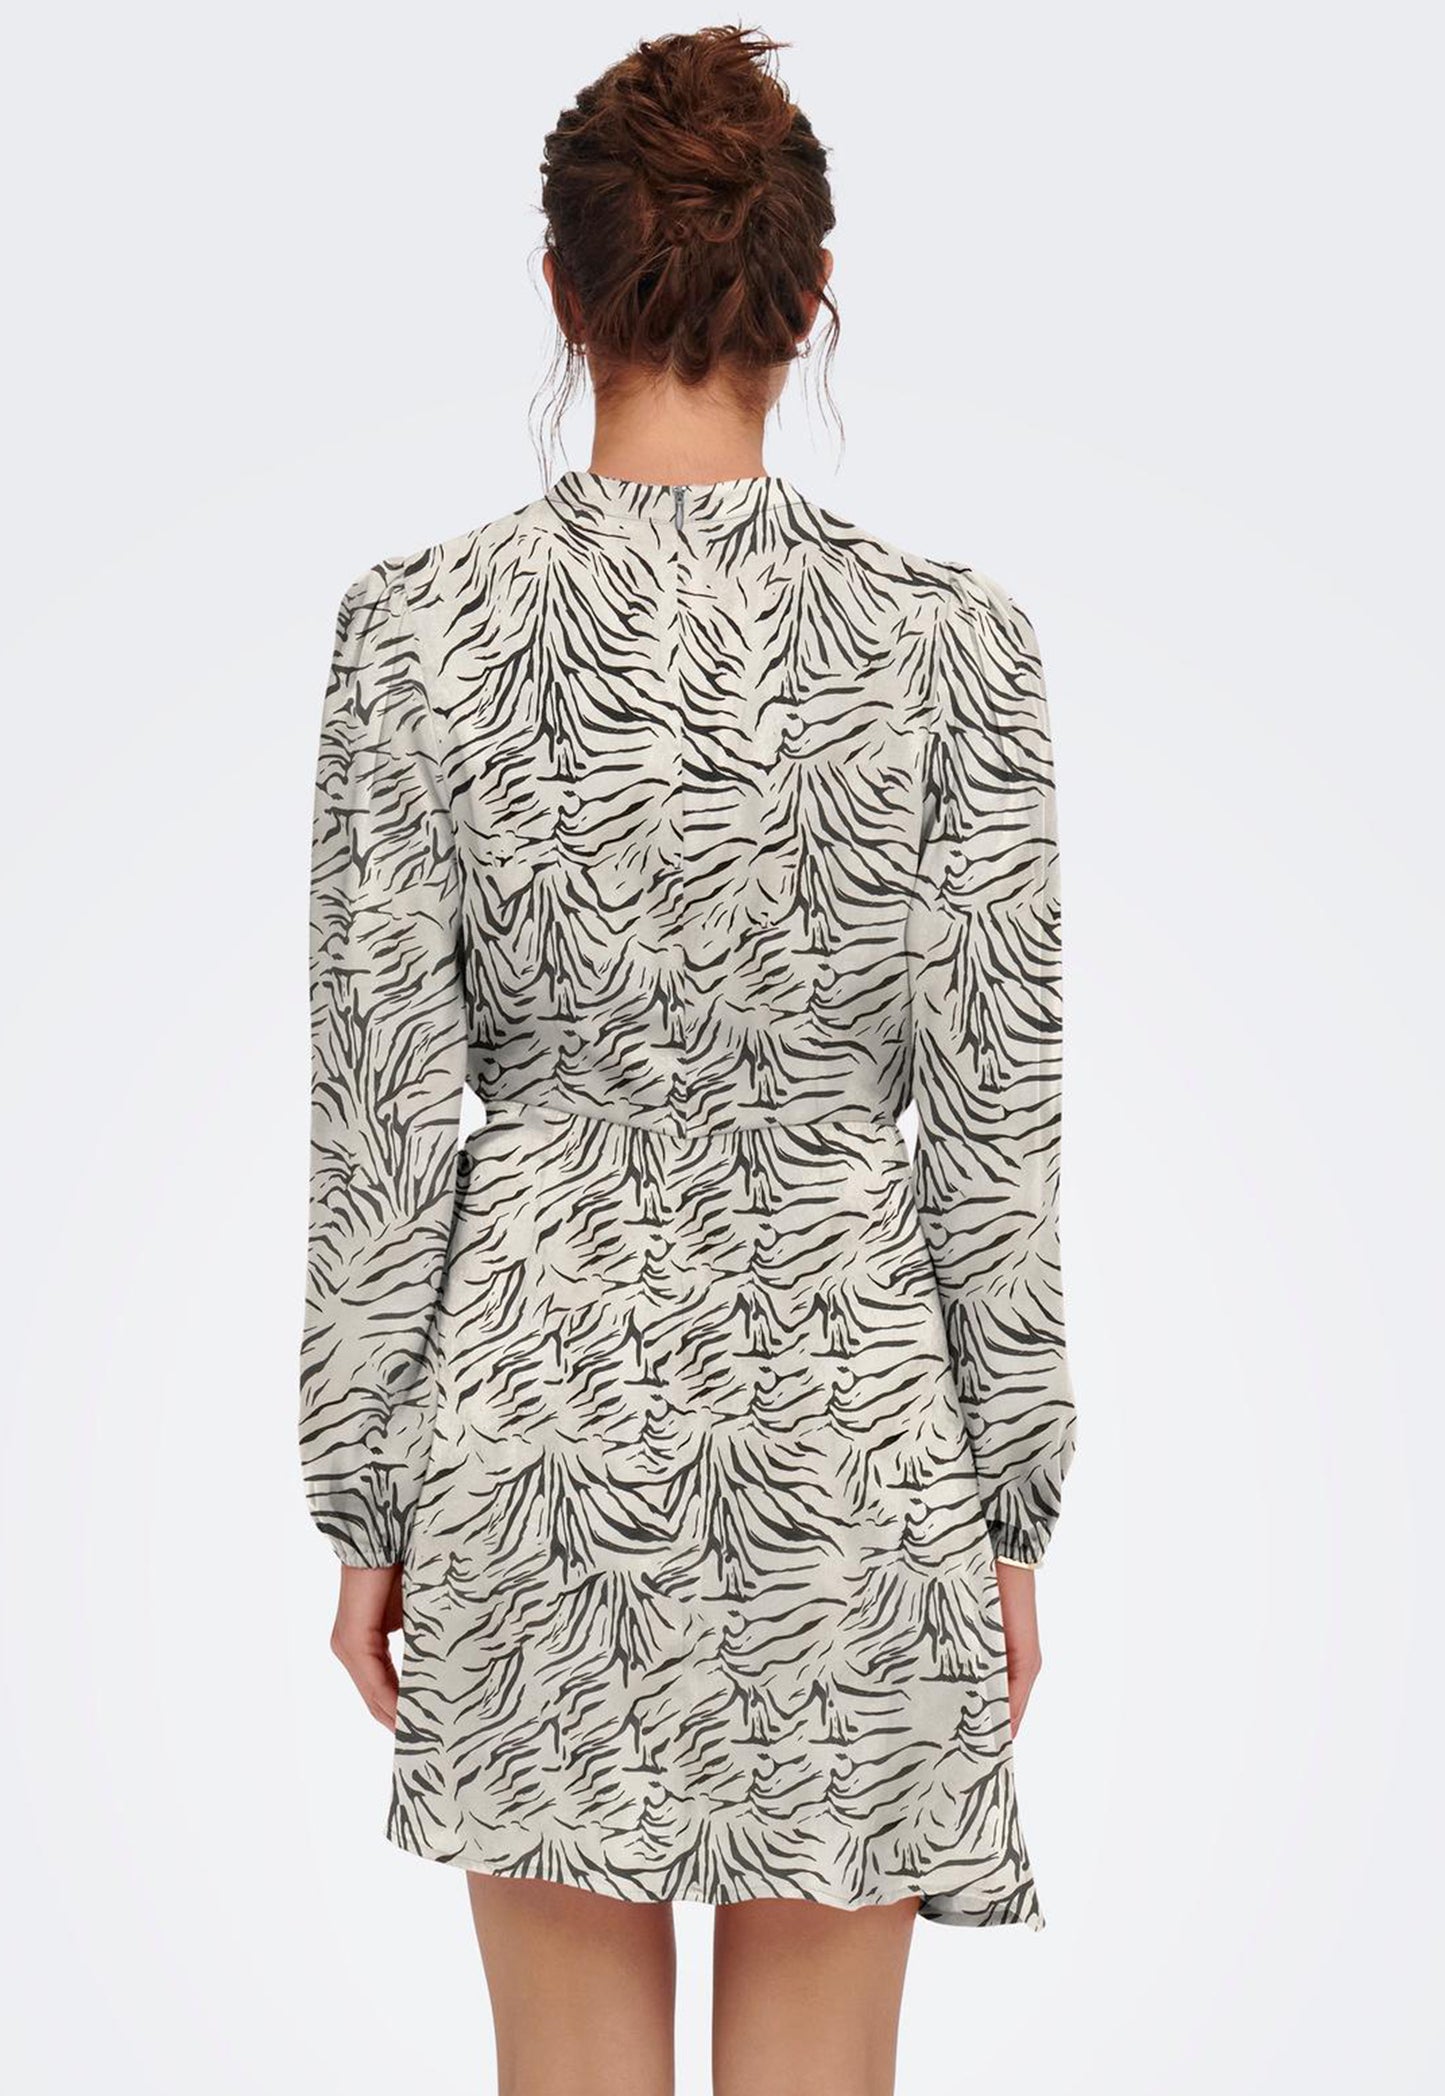 
                  
                    ONLY Mille Zebra Animal Print High Neck Wrap Skirt Mini Dress in Cream & Black - One Nation Clothing
                  
                